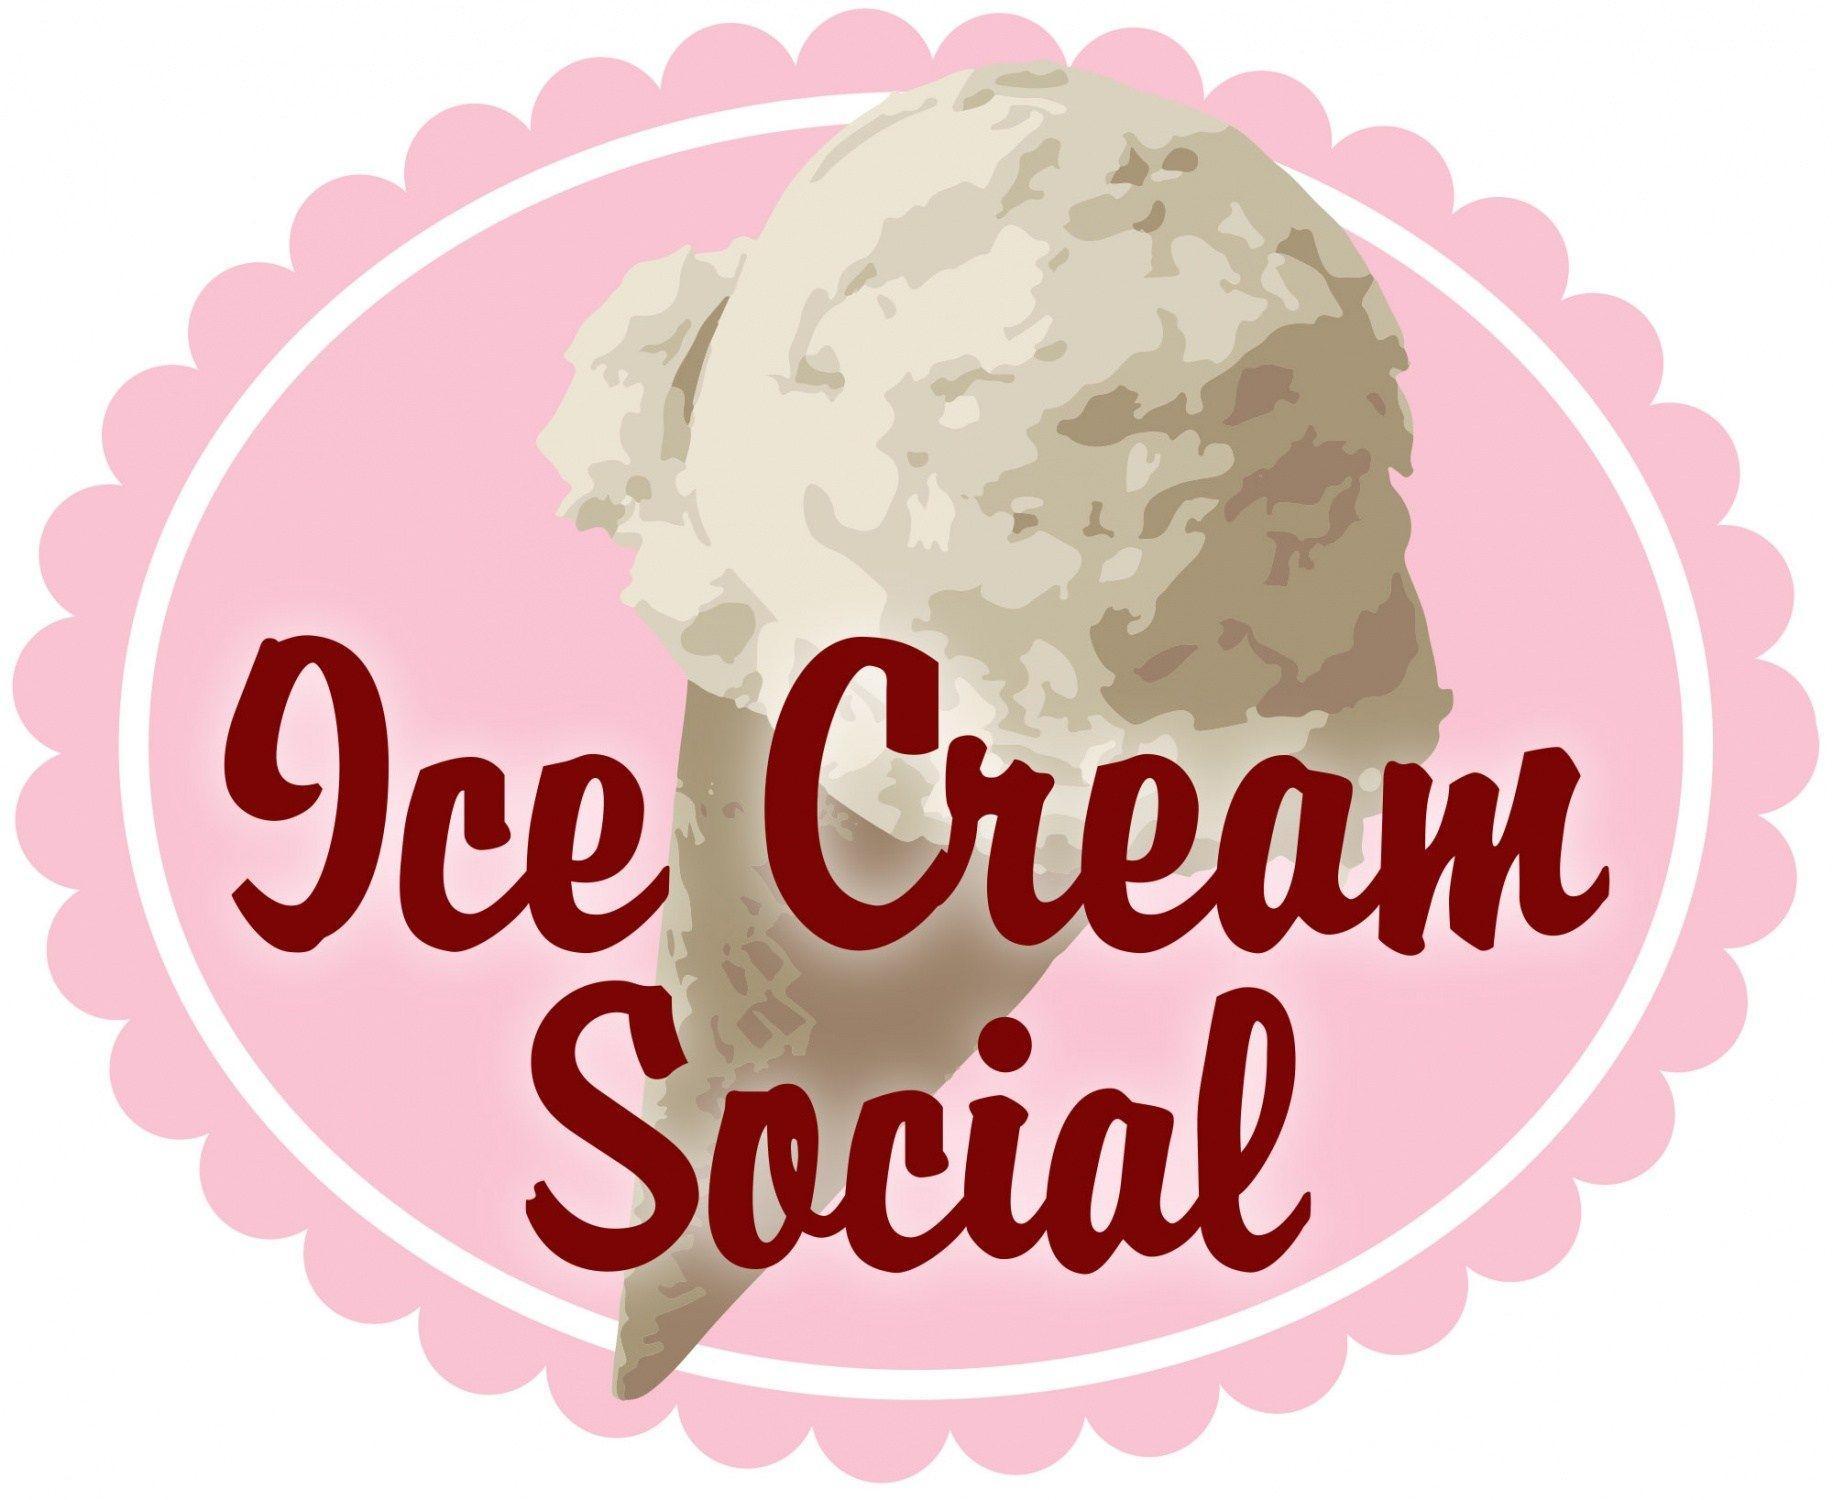 free clipart ice cream social